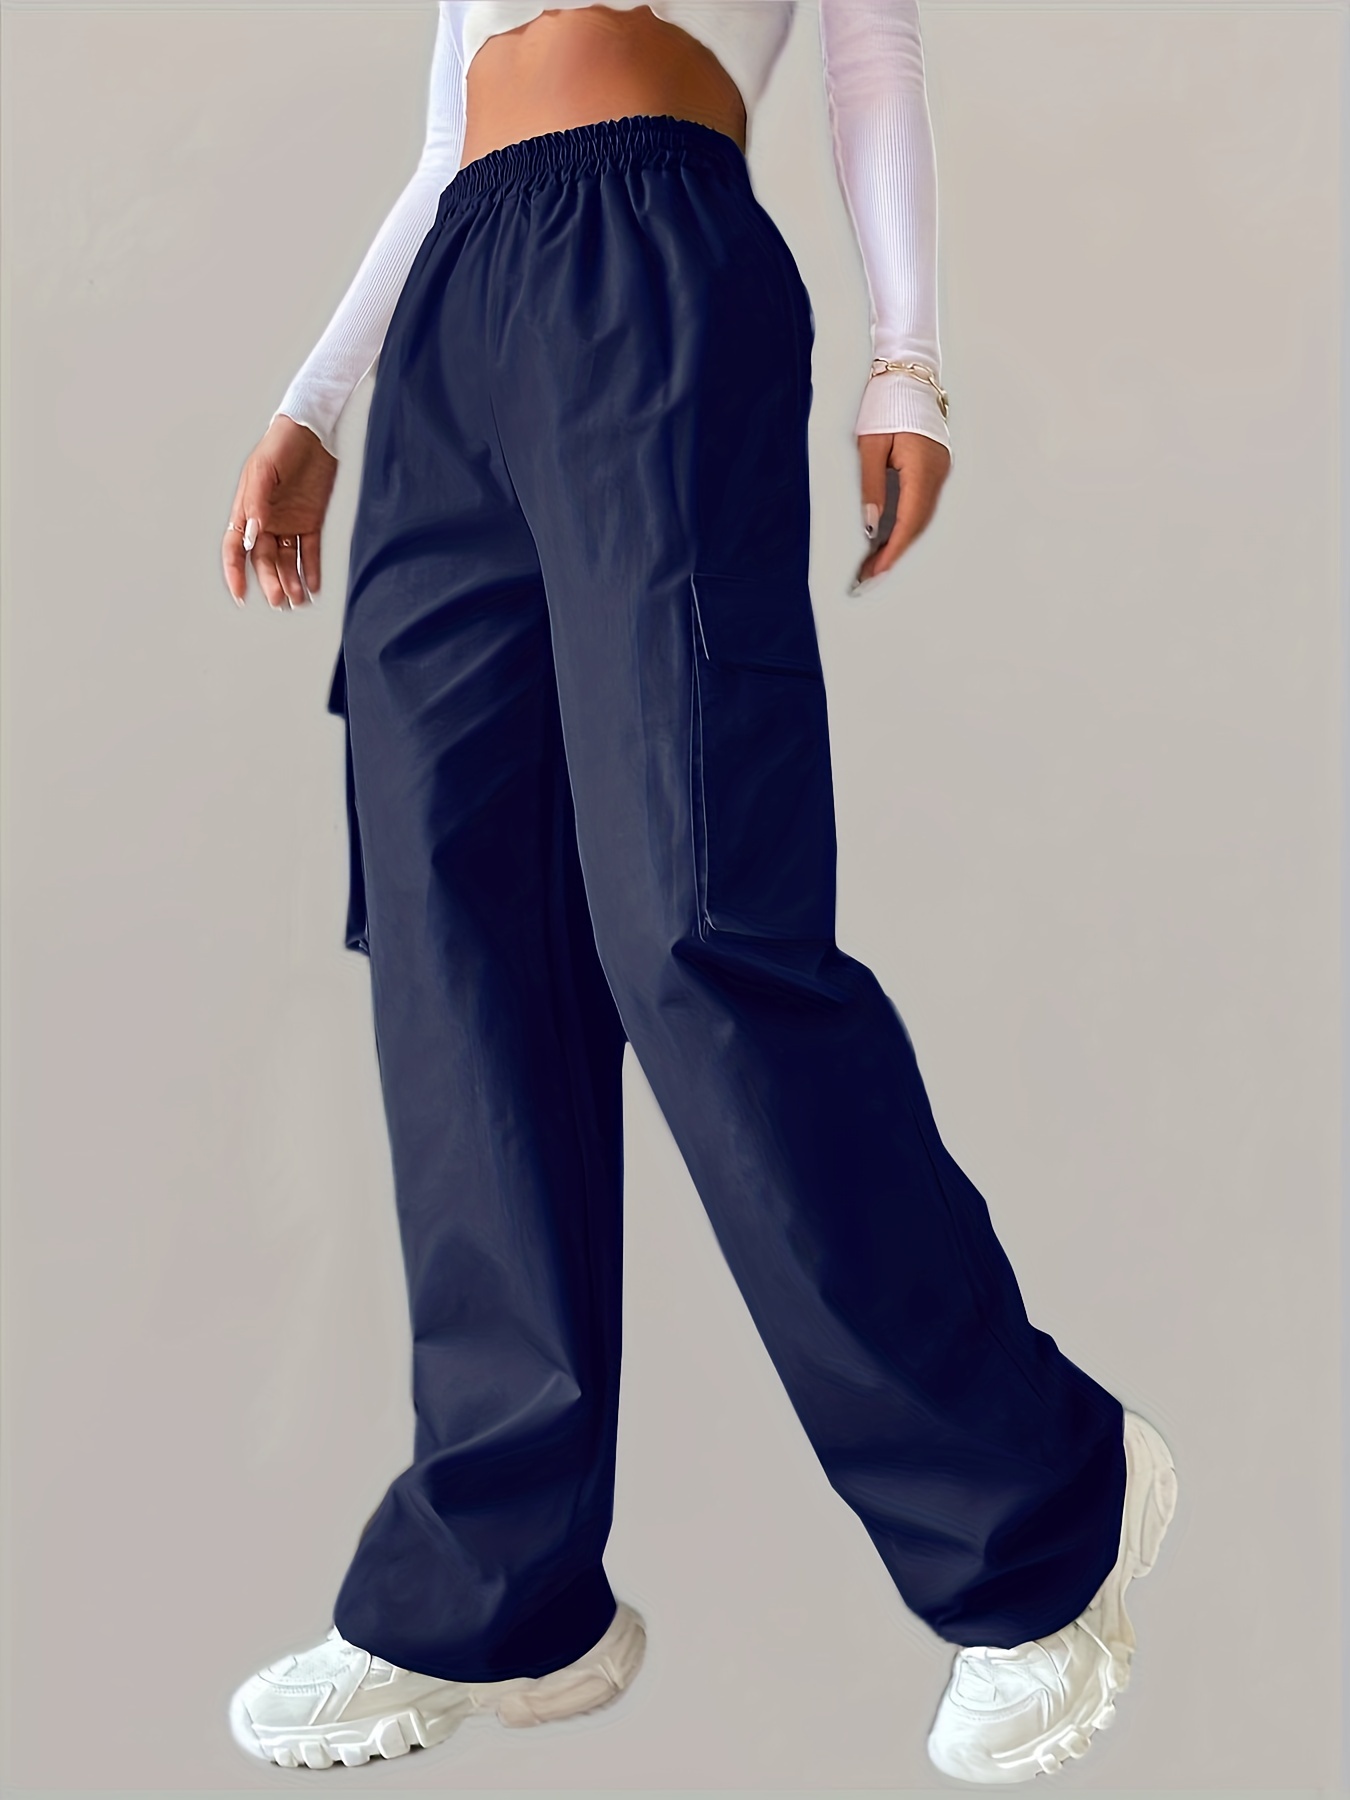 LDadgf Women's Wear Multi Waist Three Pocket Trousers Waist Cargo Pants  Casual Pants Casual Pants for Women for Work Very Soft